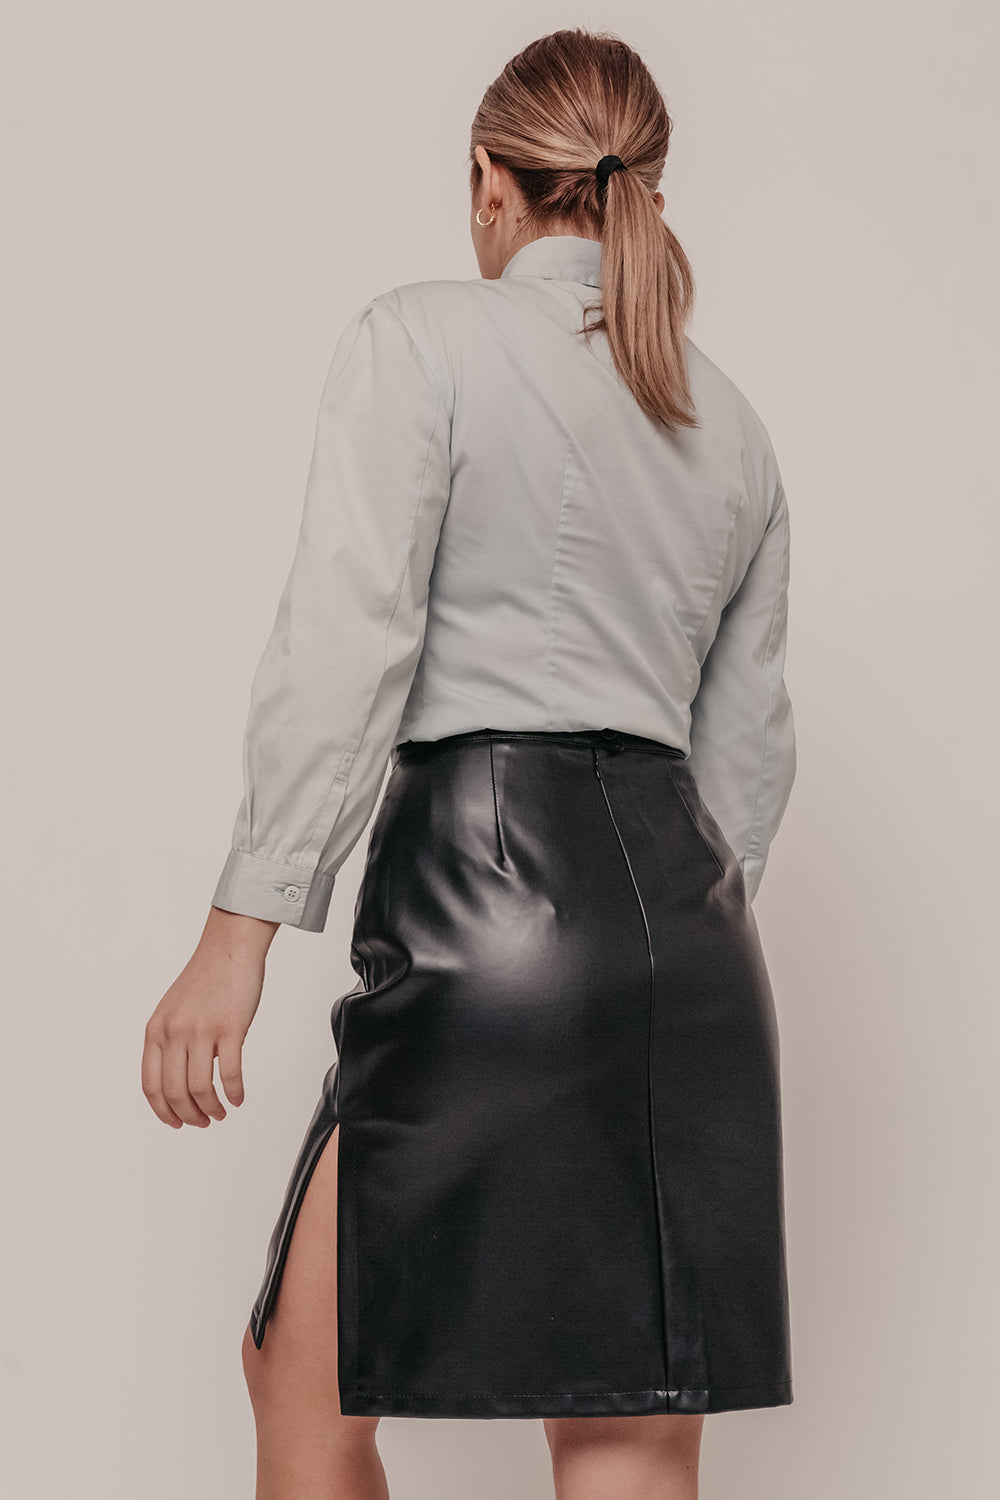 Sportmax by Max Mara Vegan Leather Skirt Size 8